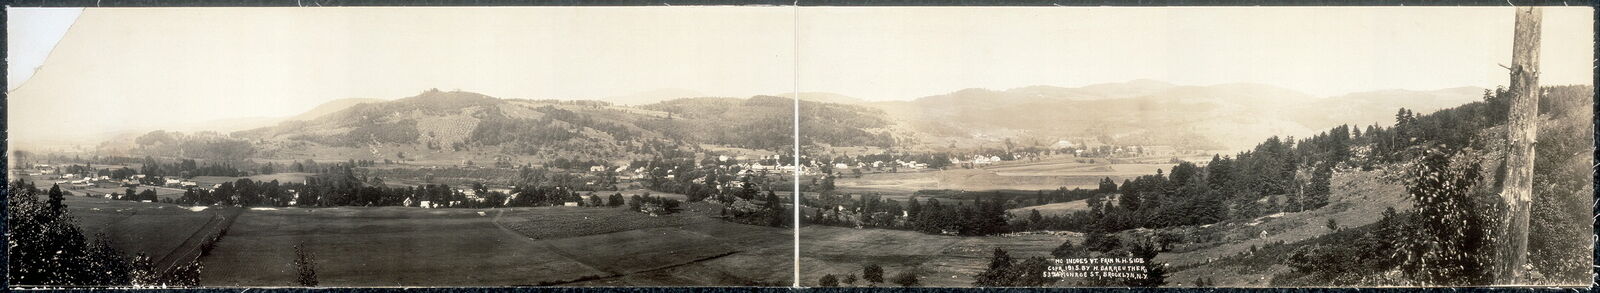 1915 Panorama: McIndoe Falls,Barnet,Caledonia County,Vt. from N.H. side, 05050